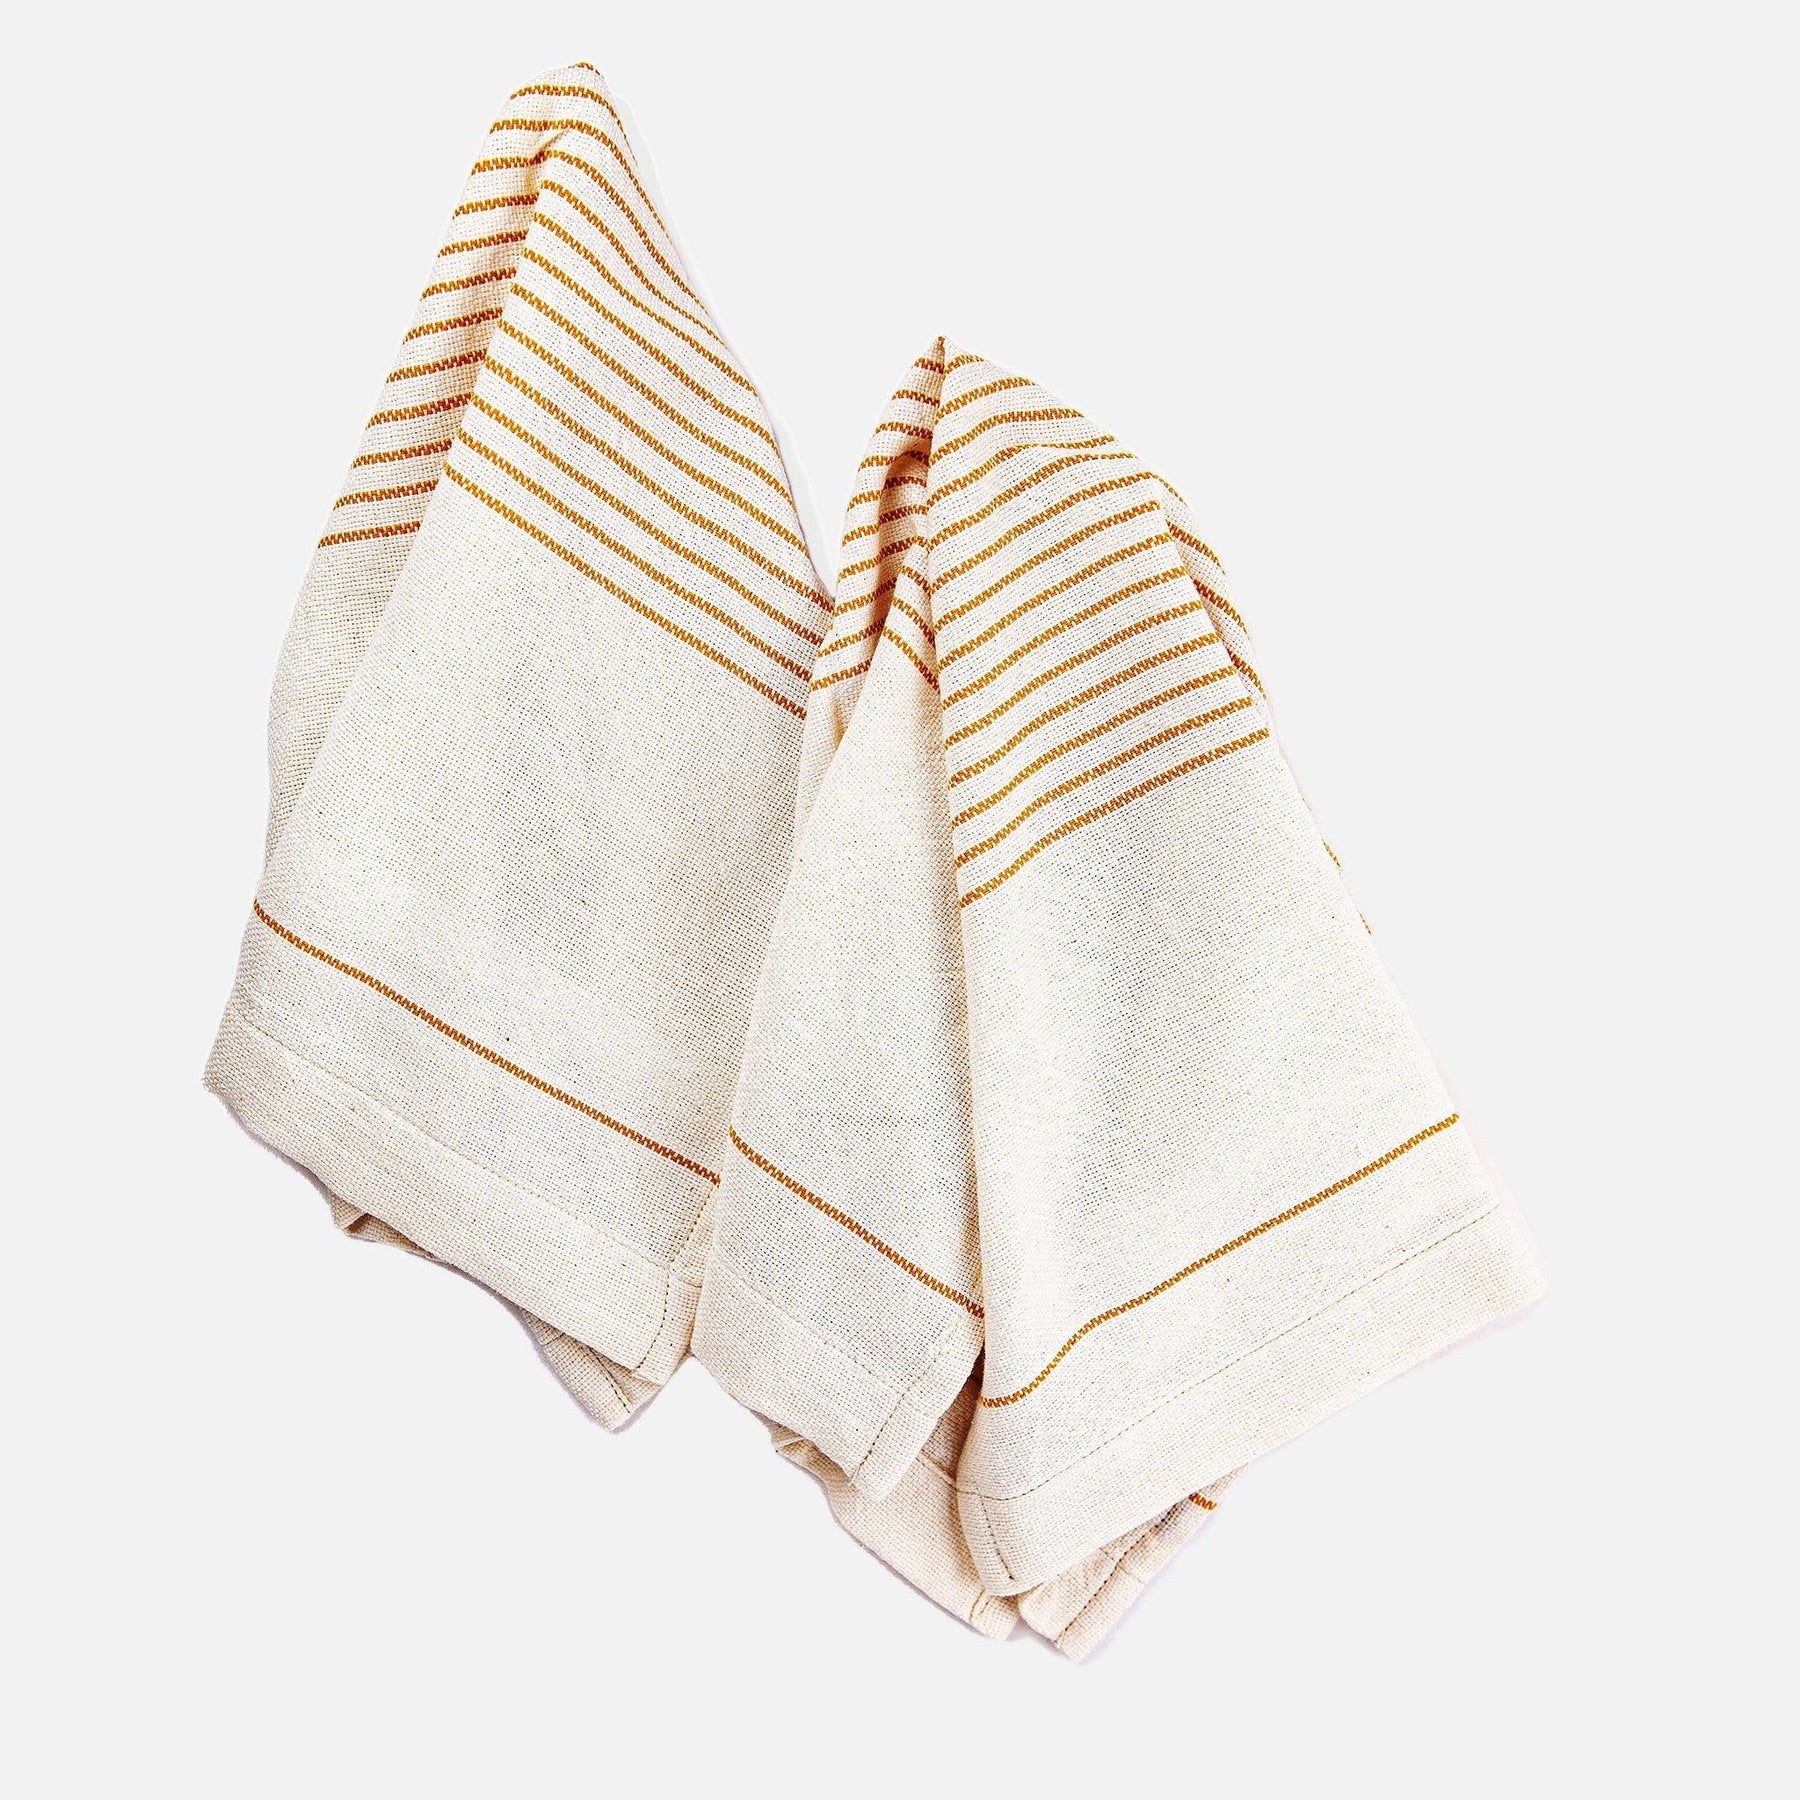 Cotton Tea Towels, Set of 2